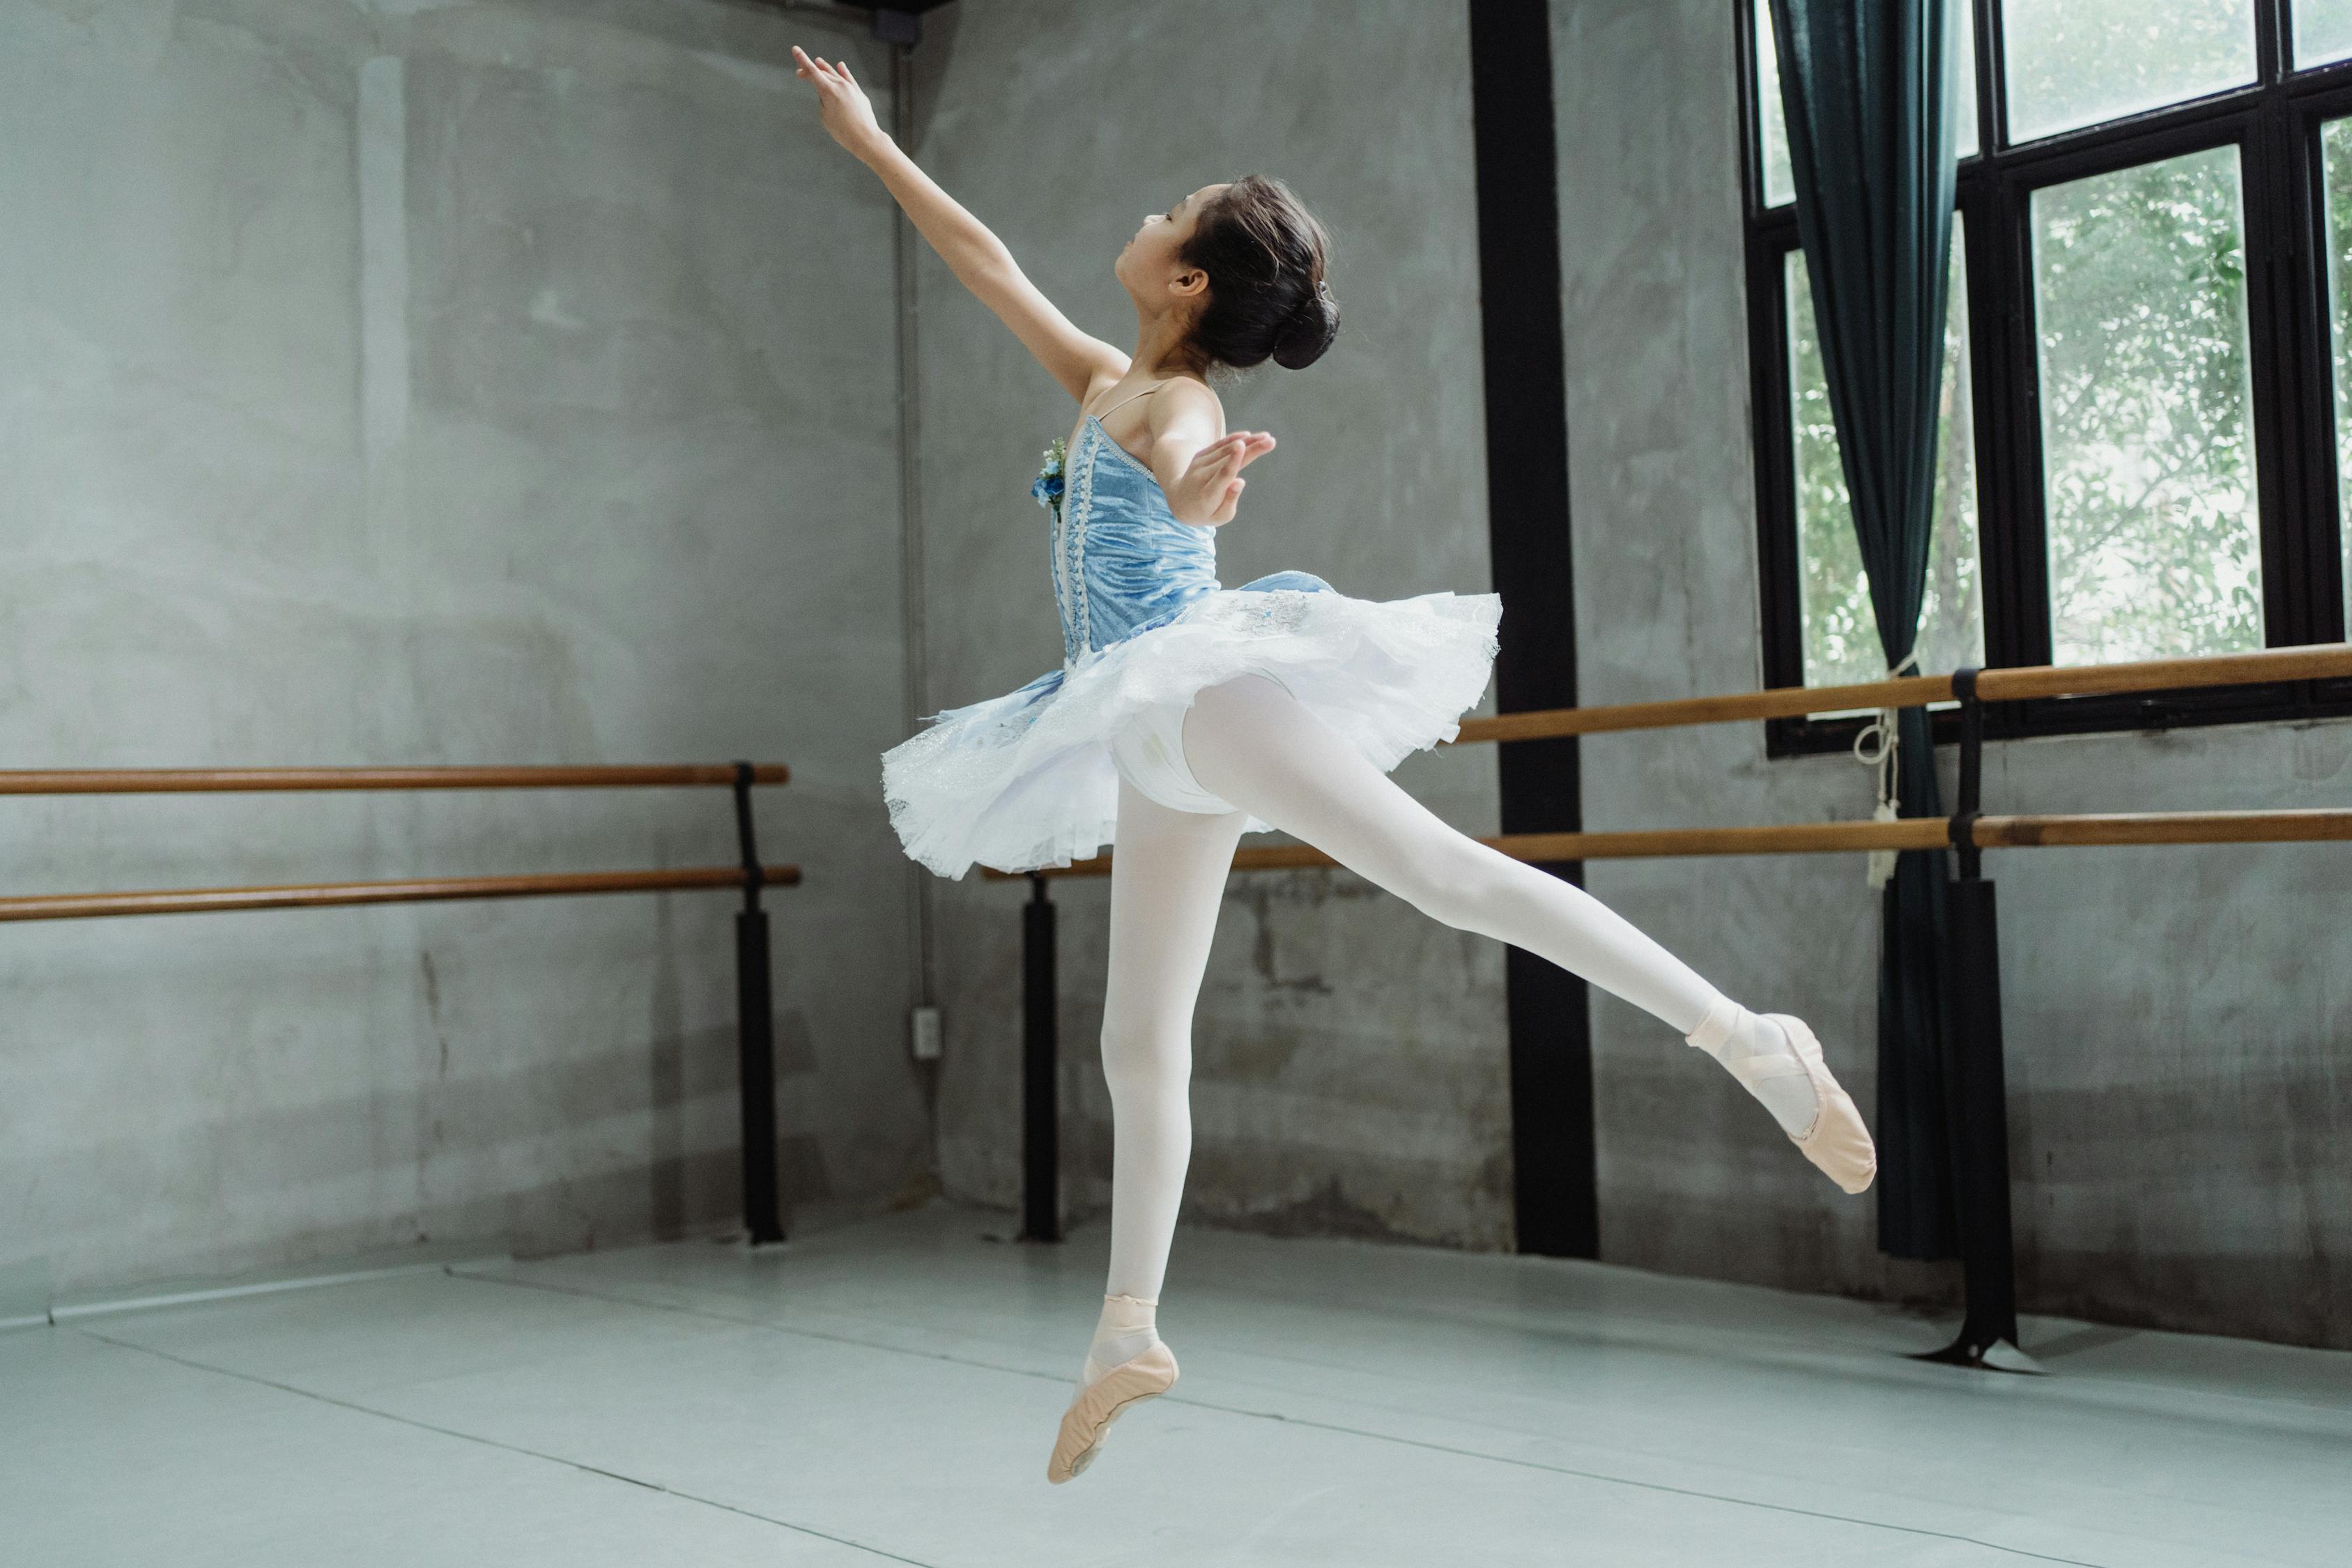 Ballerina Girl Performing Ballet Jump In Studio · Free Stock Photo